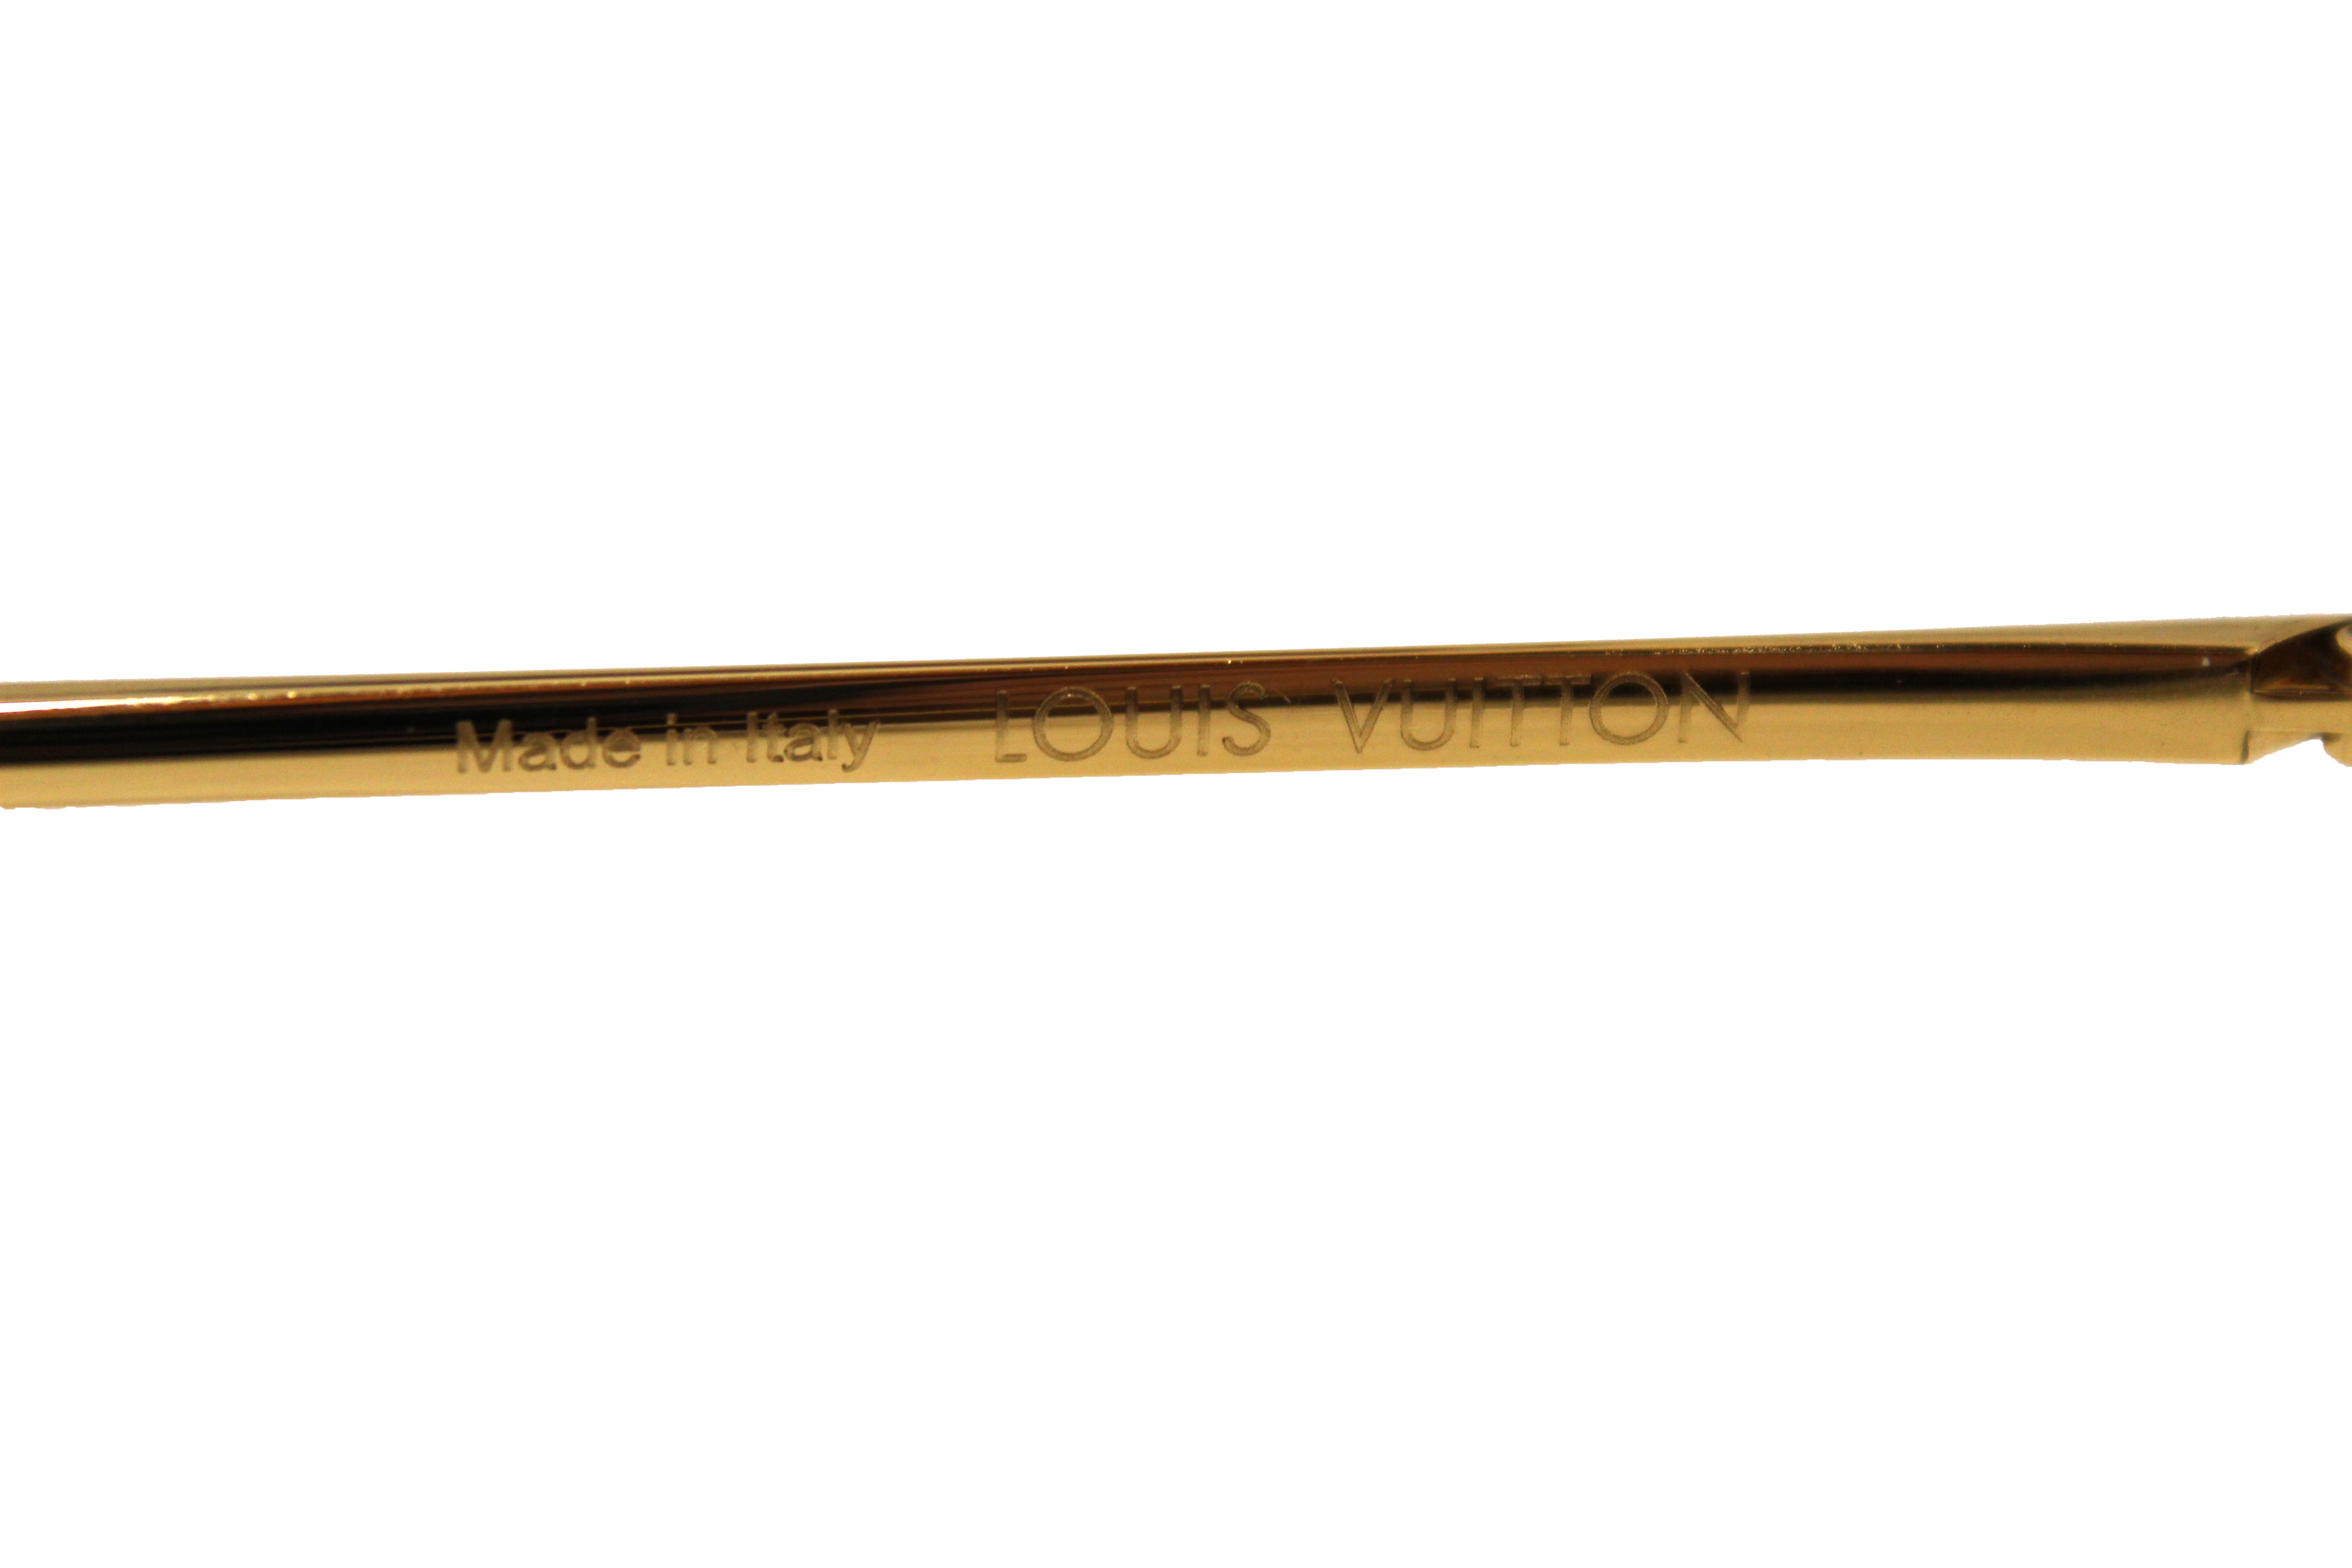 Louis Vuitton Clockwise Gold Aviator Sunglasses - Dress Cheshire